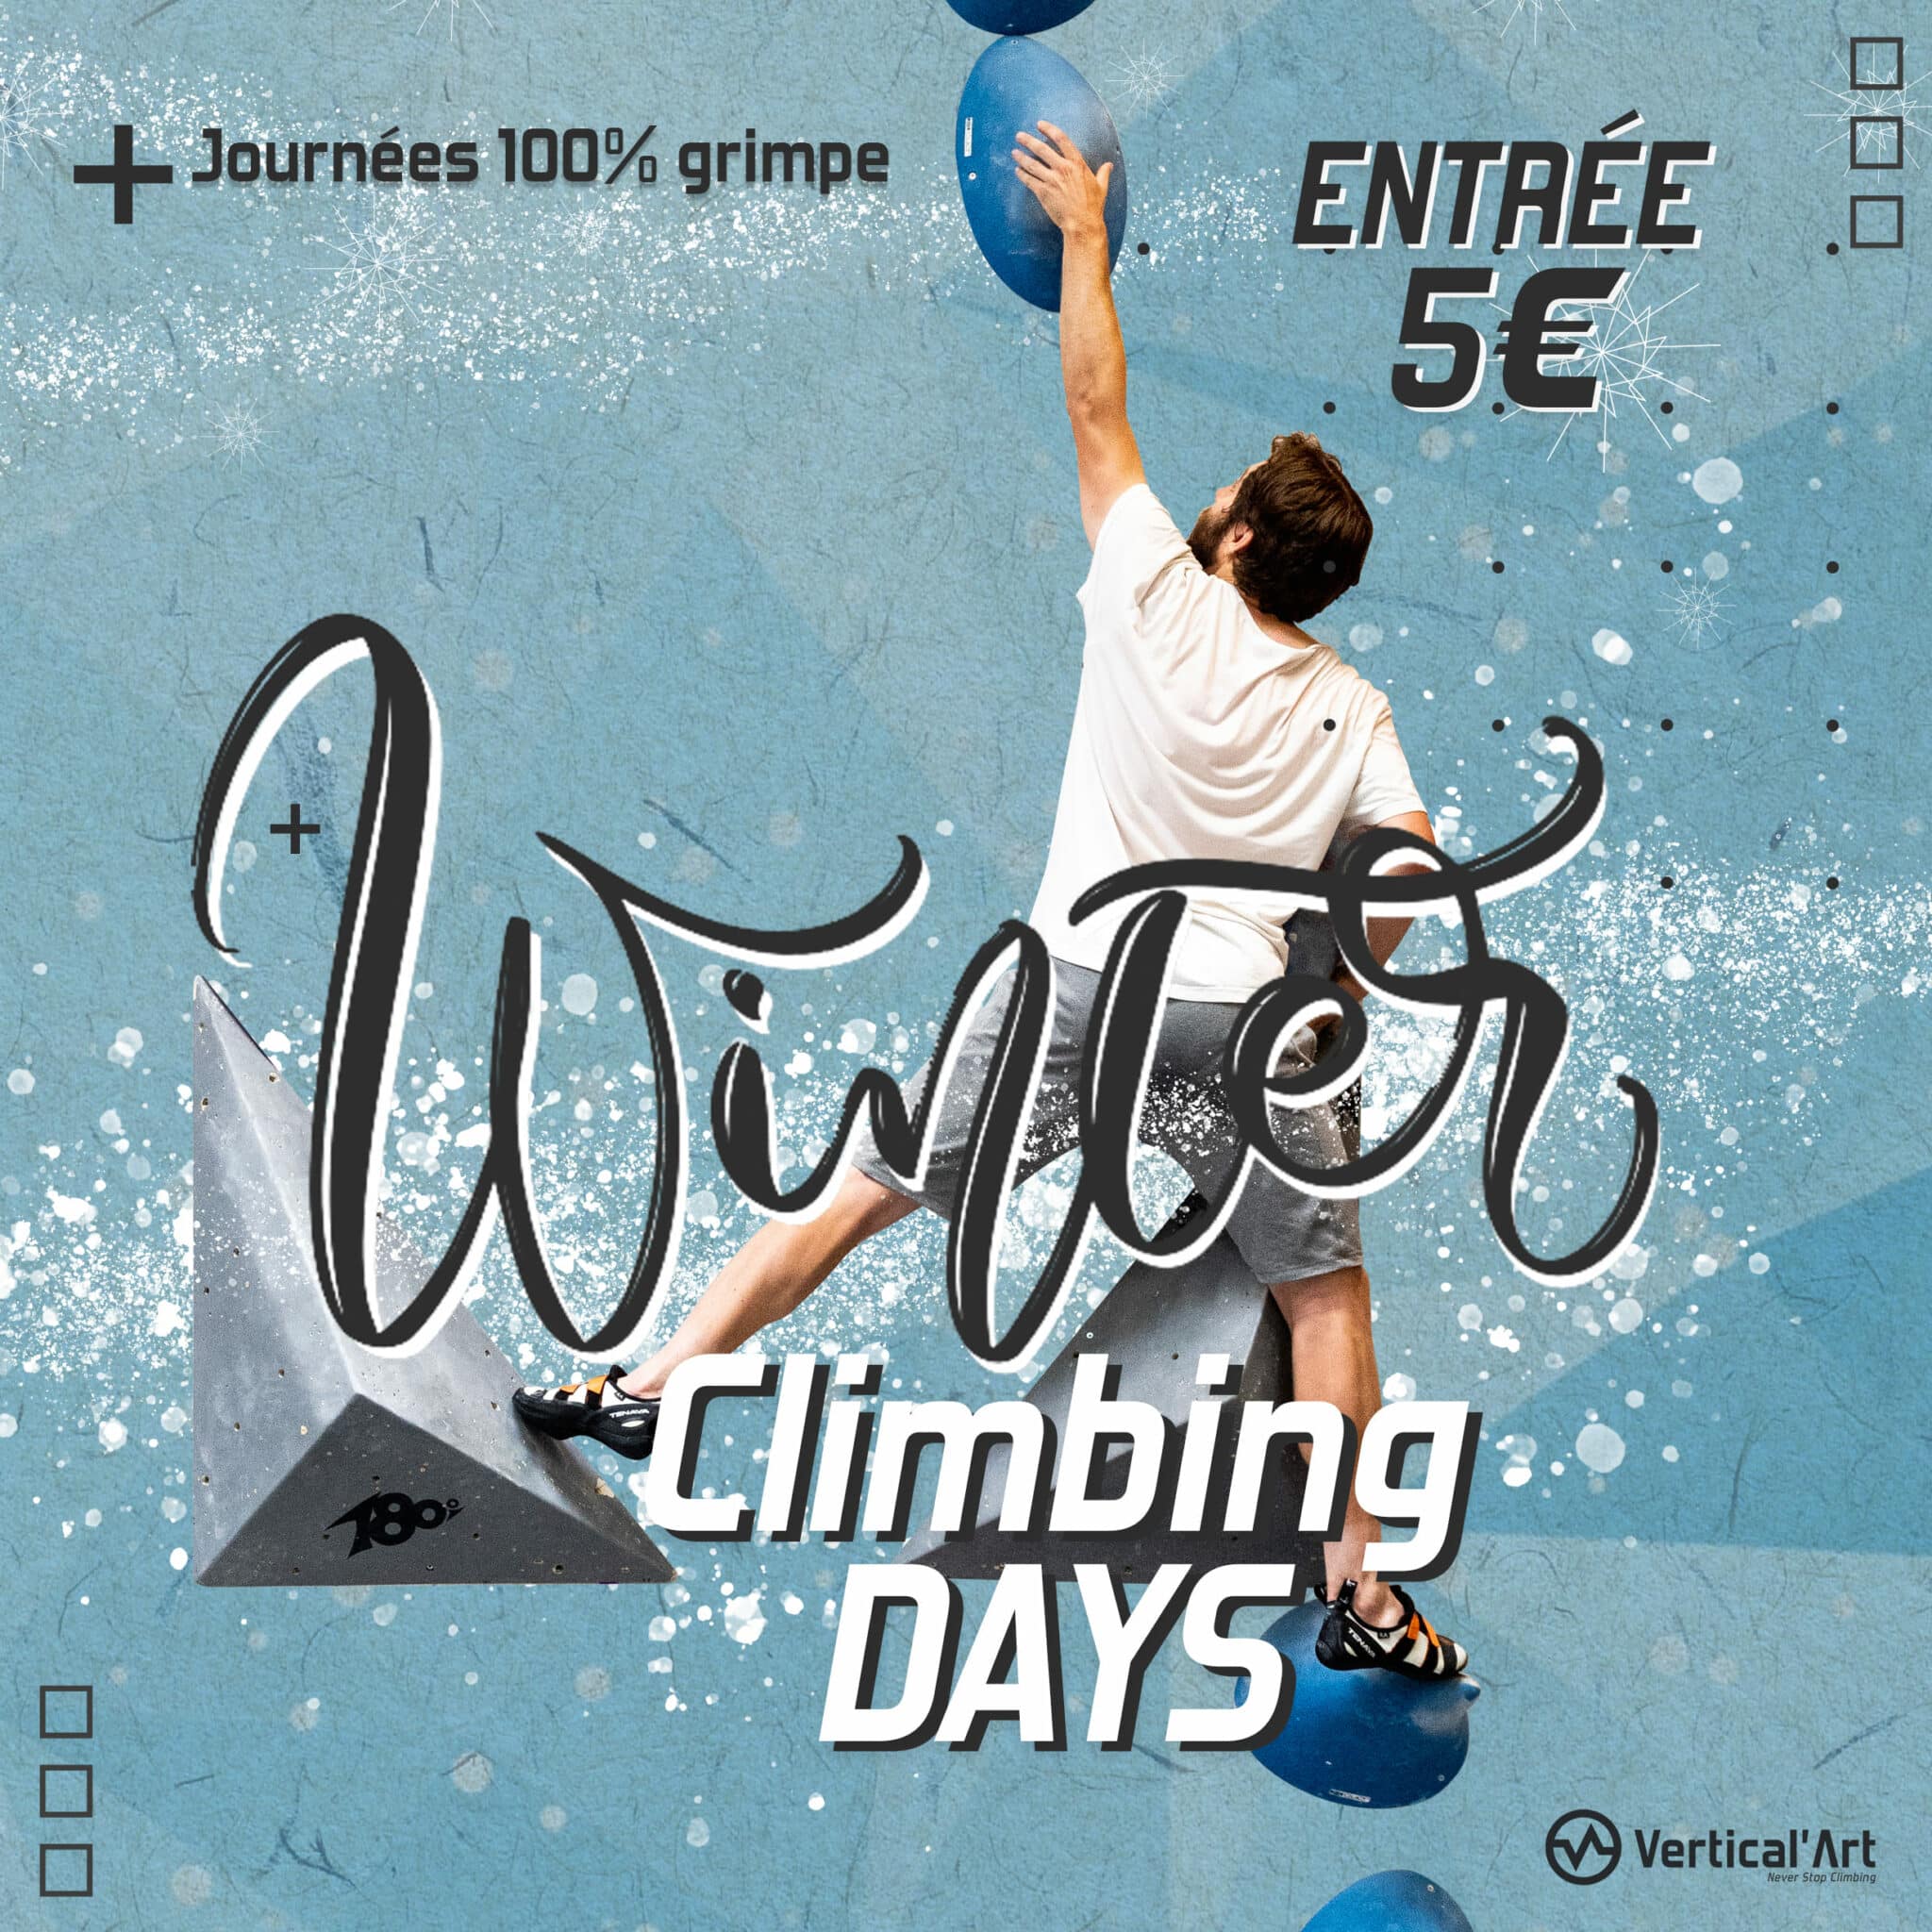 Winter Climbing Days à Vertical’Art Dijon, escalade à 5€ pour tous en mars